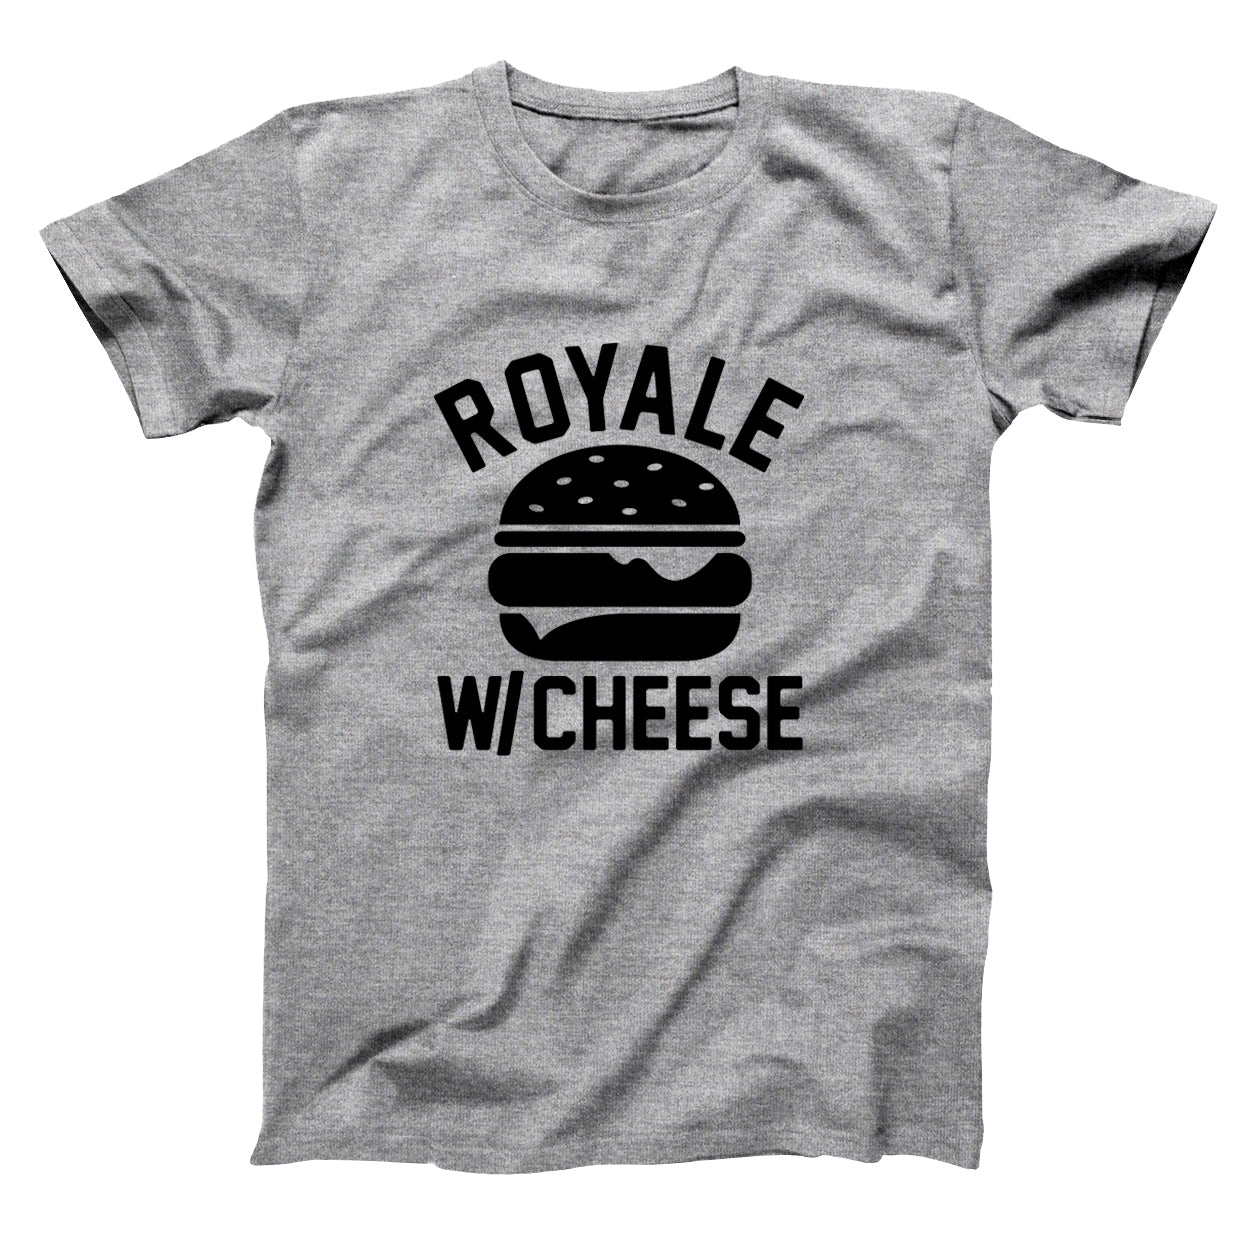 Royal With Cheese Tshirt - Donkey Tees